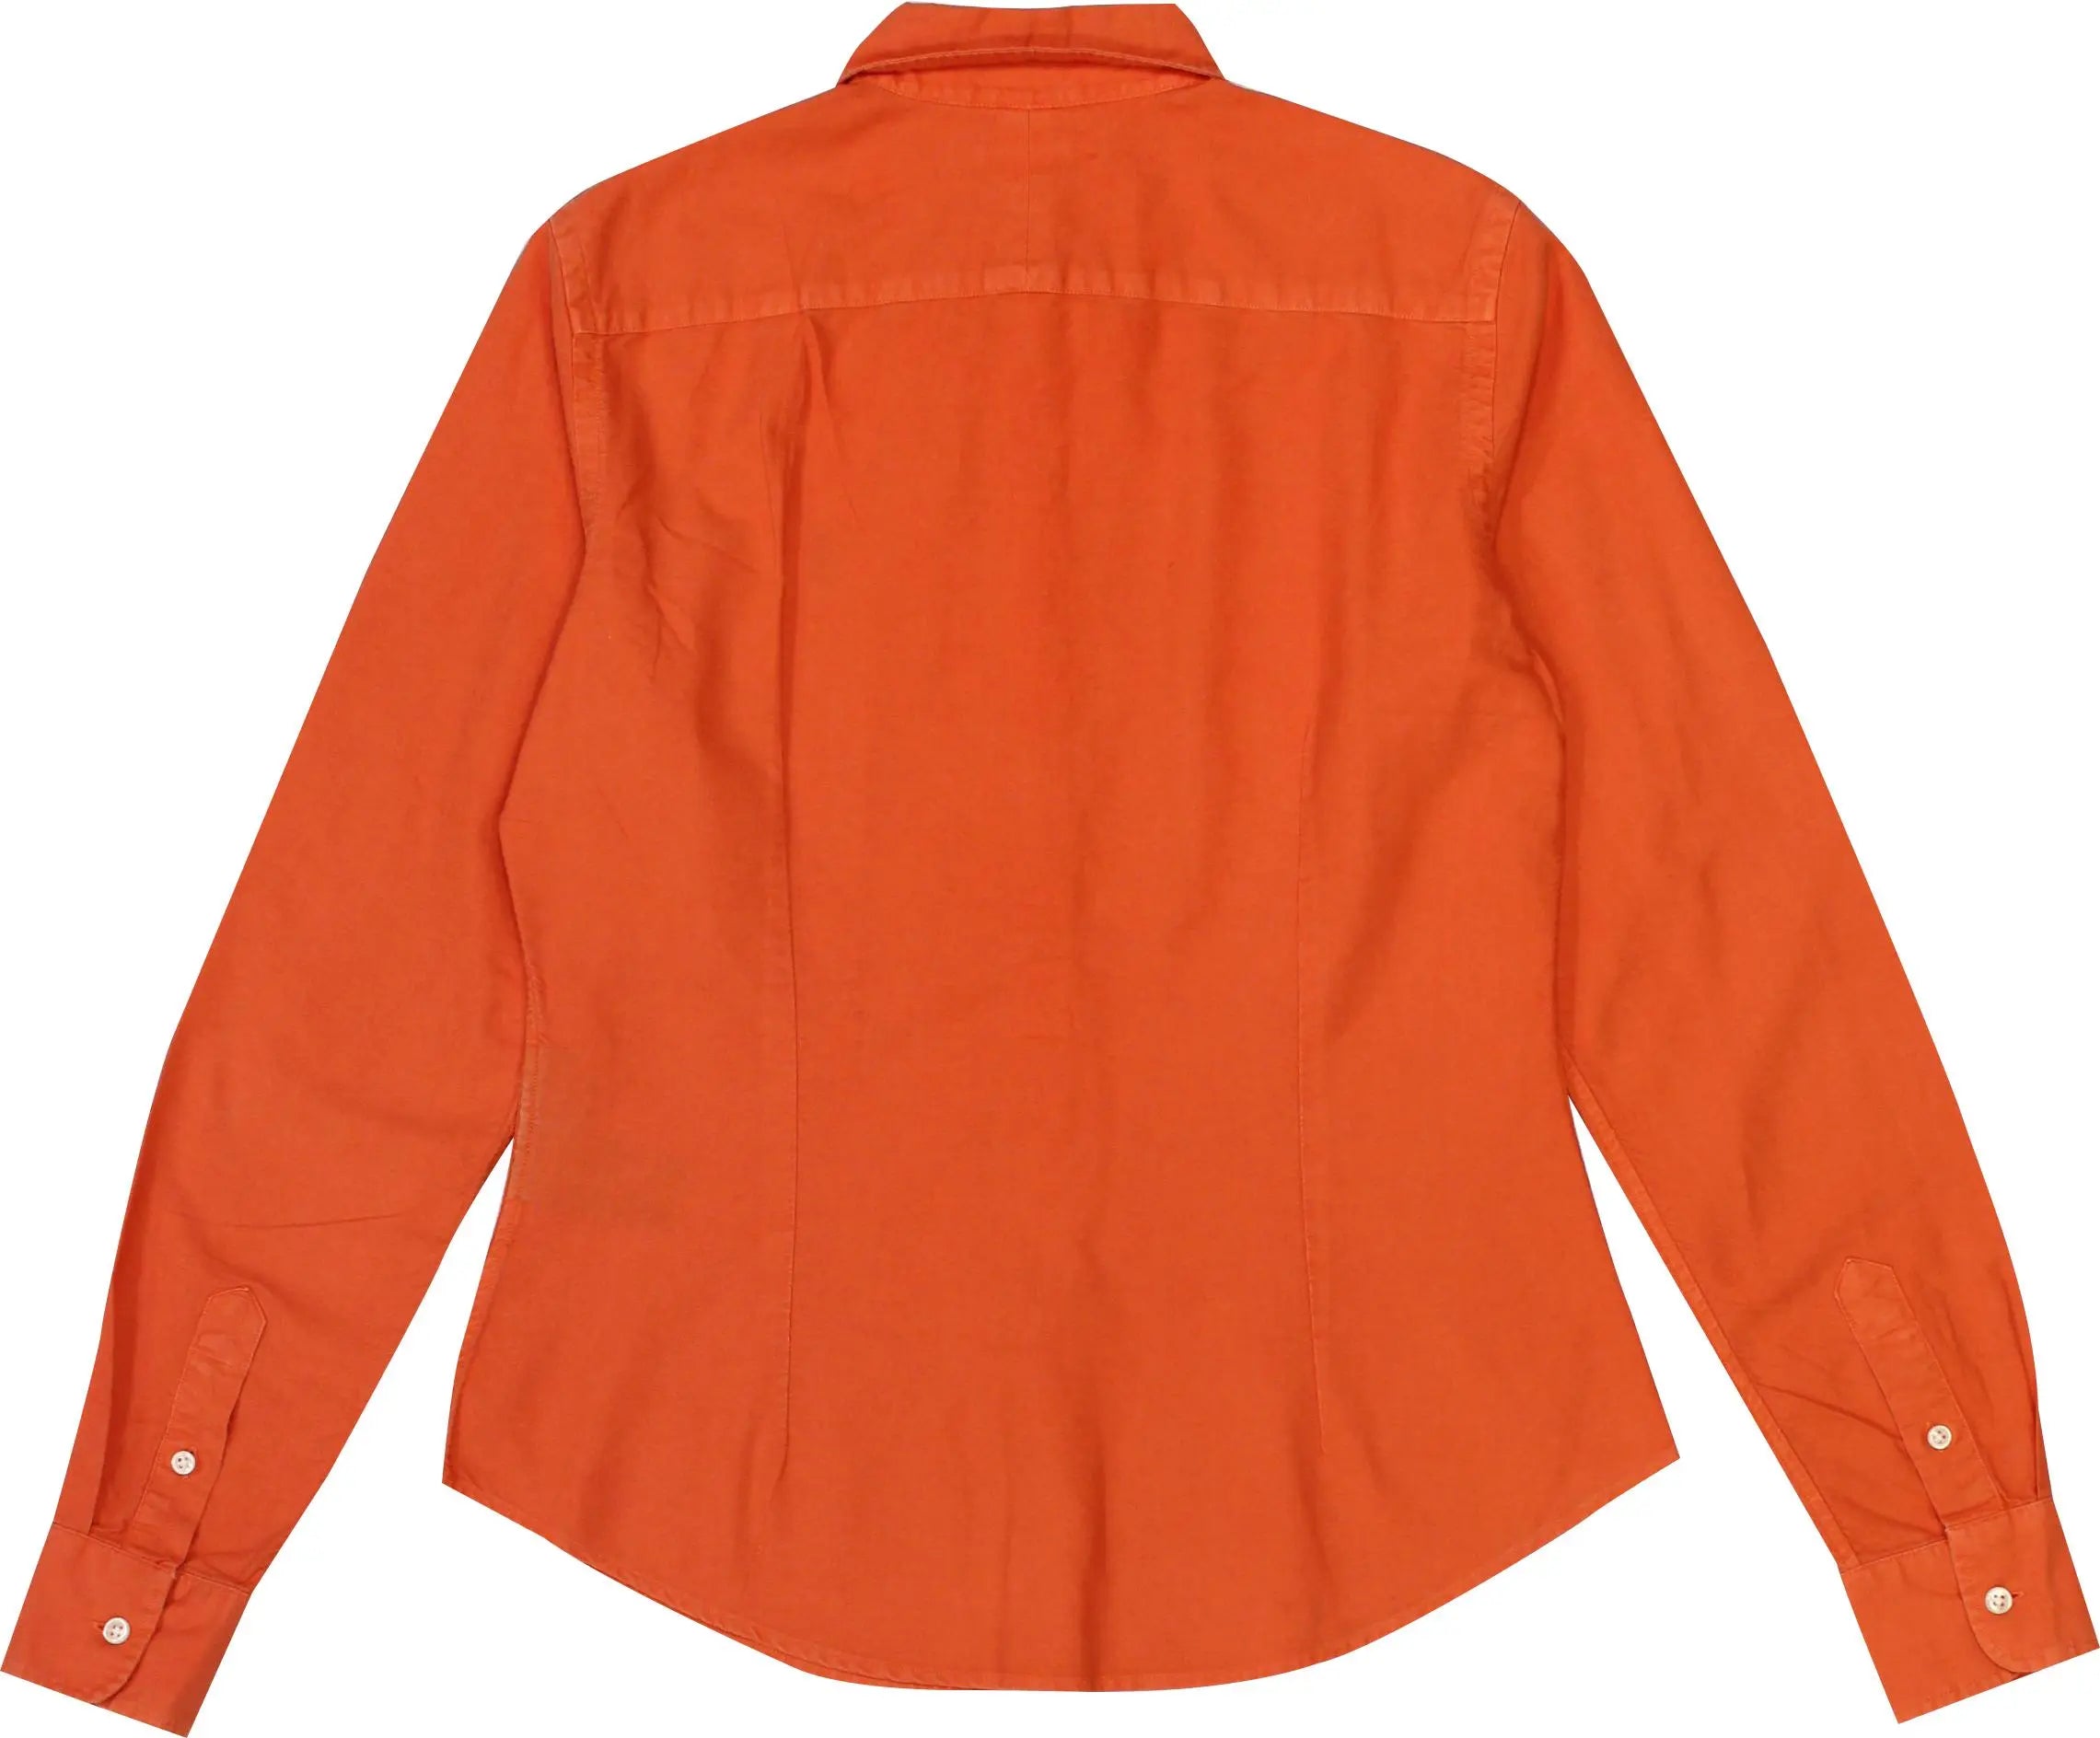 Ralph Lauren - Skinny Fit Orange Blouse by Ralph Lauren- ThriftTale.com - Vintage and second handclothing